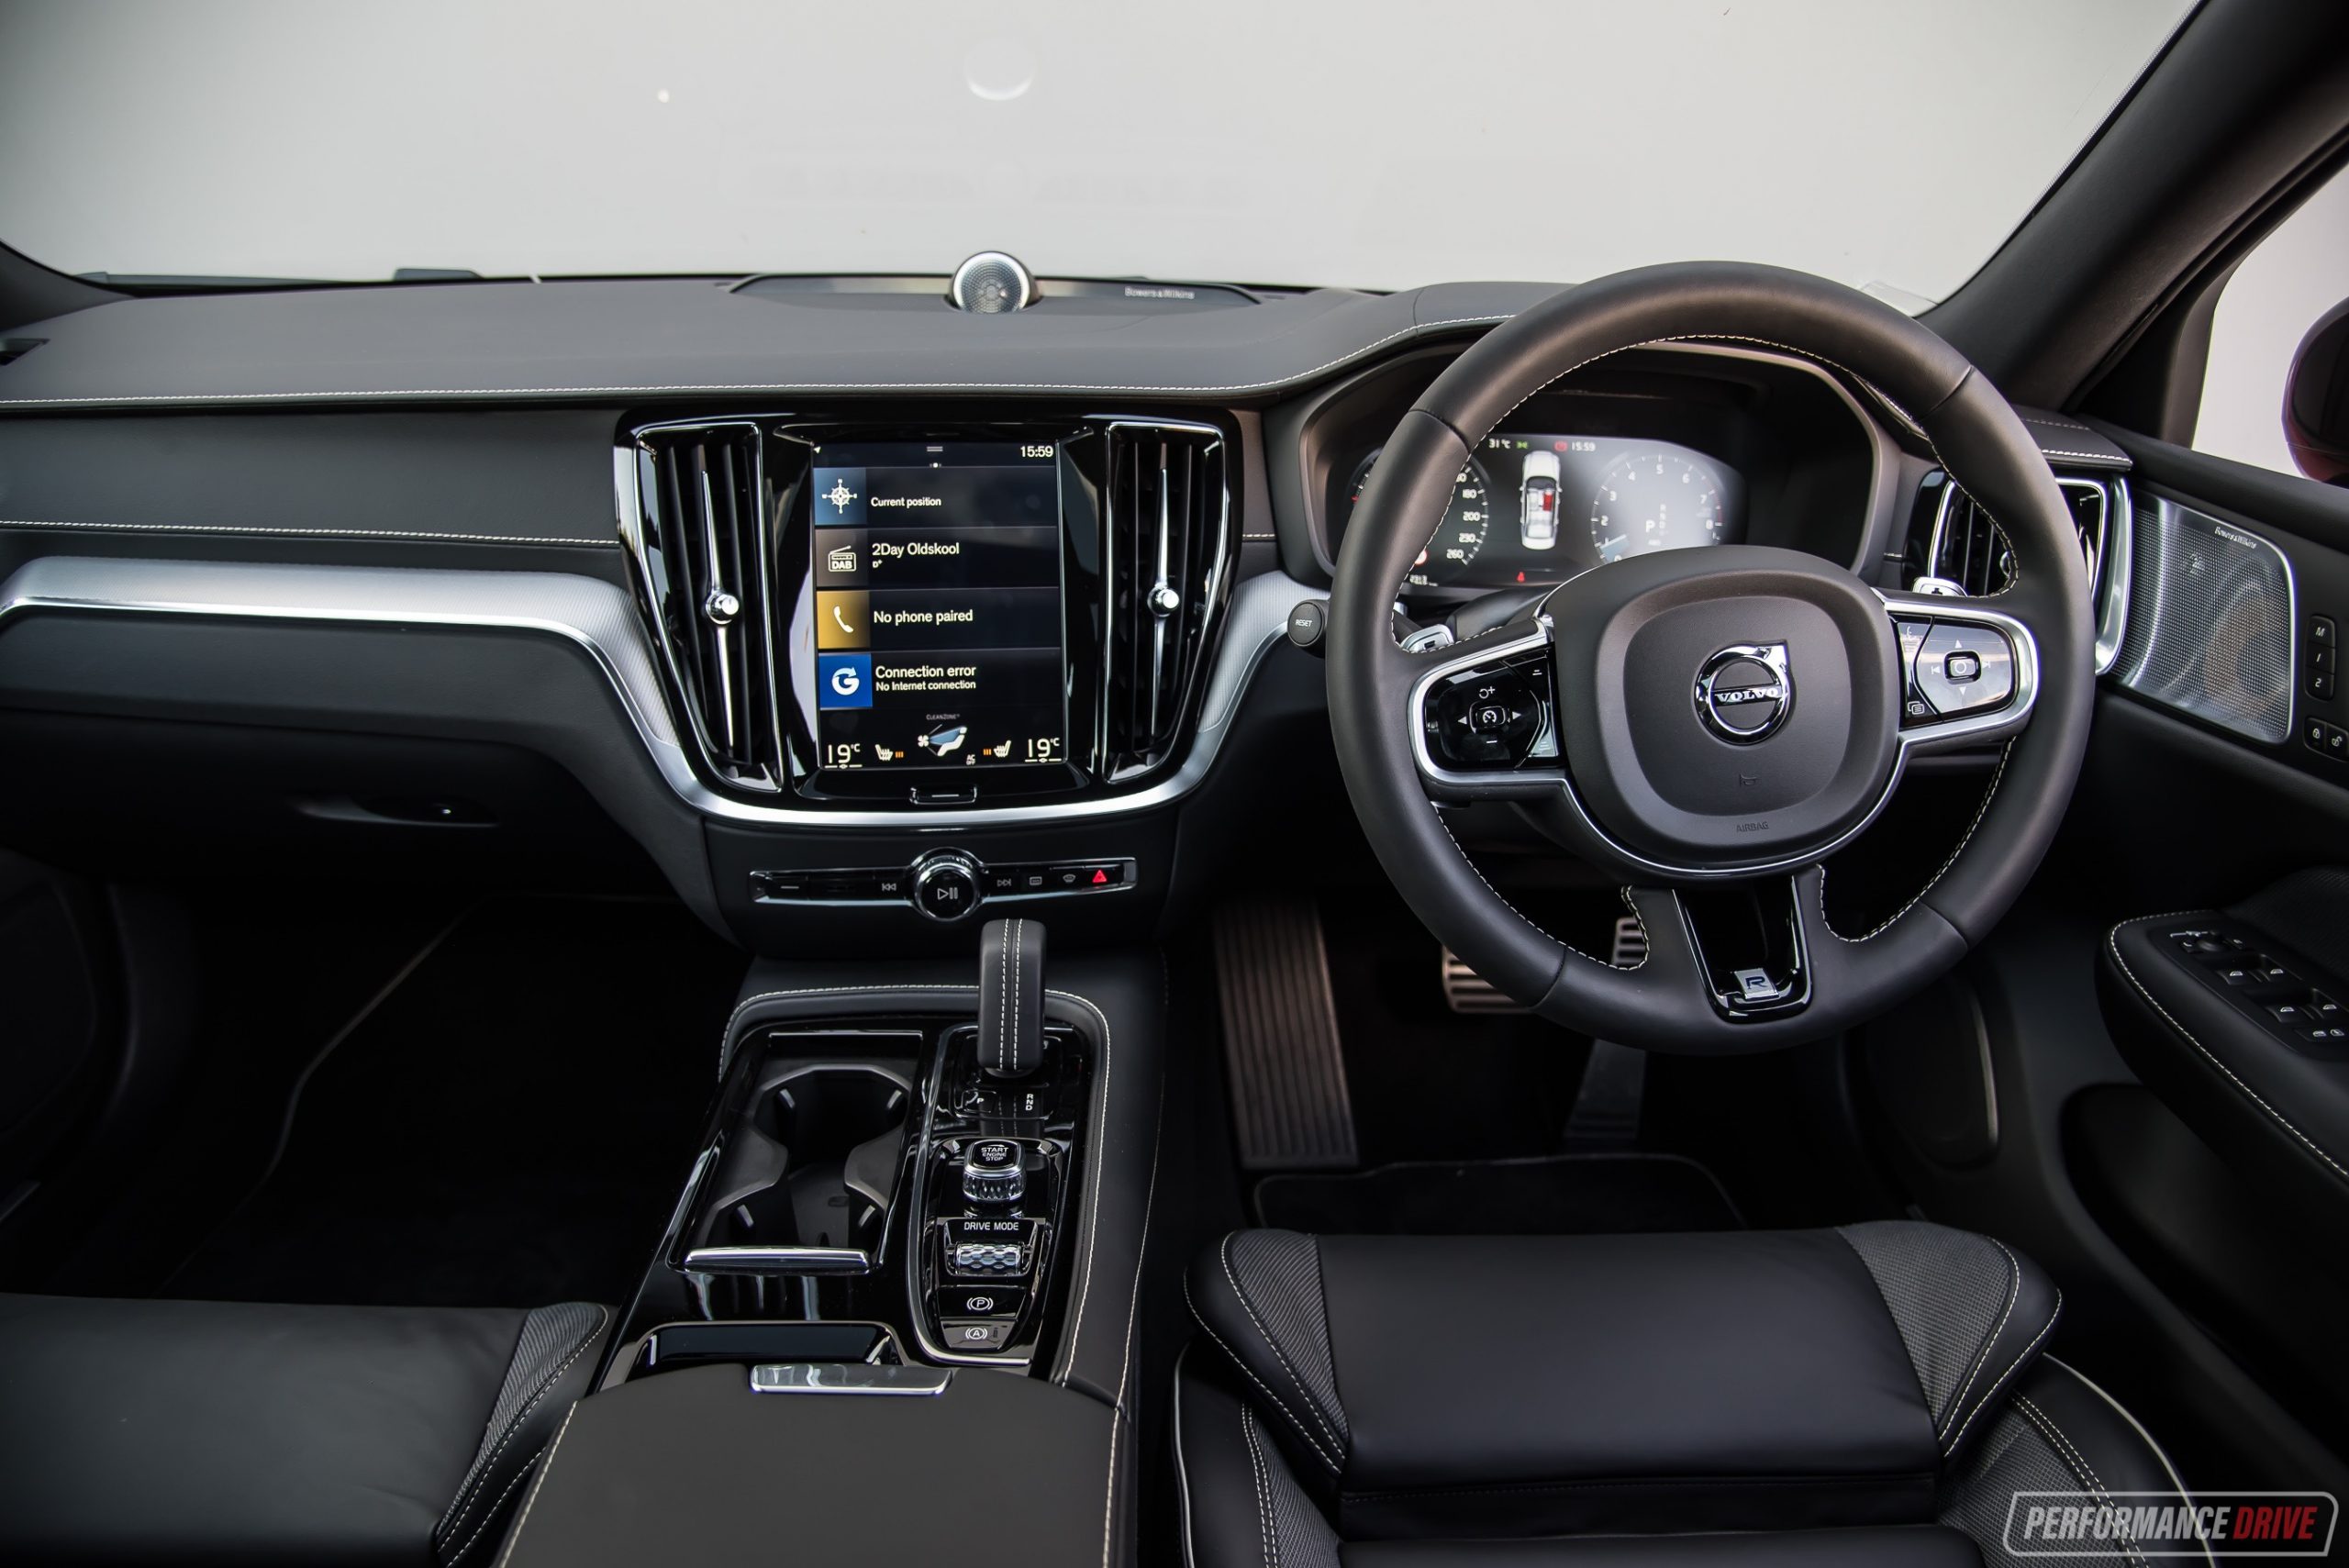 2020 Volvo S60 T8 R Design Review Video Performancedrive